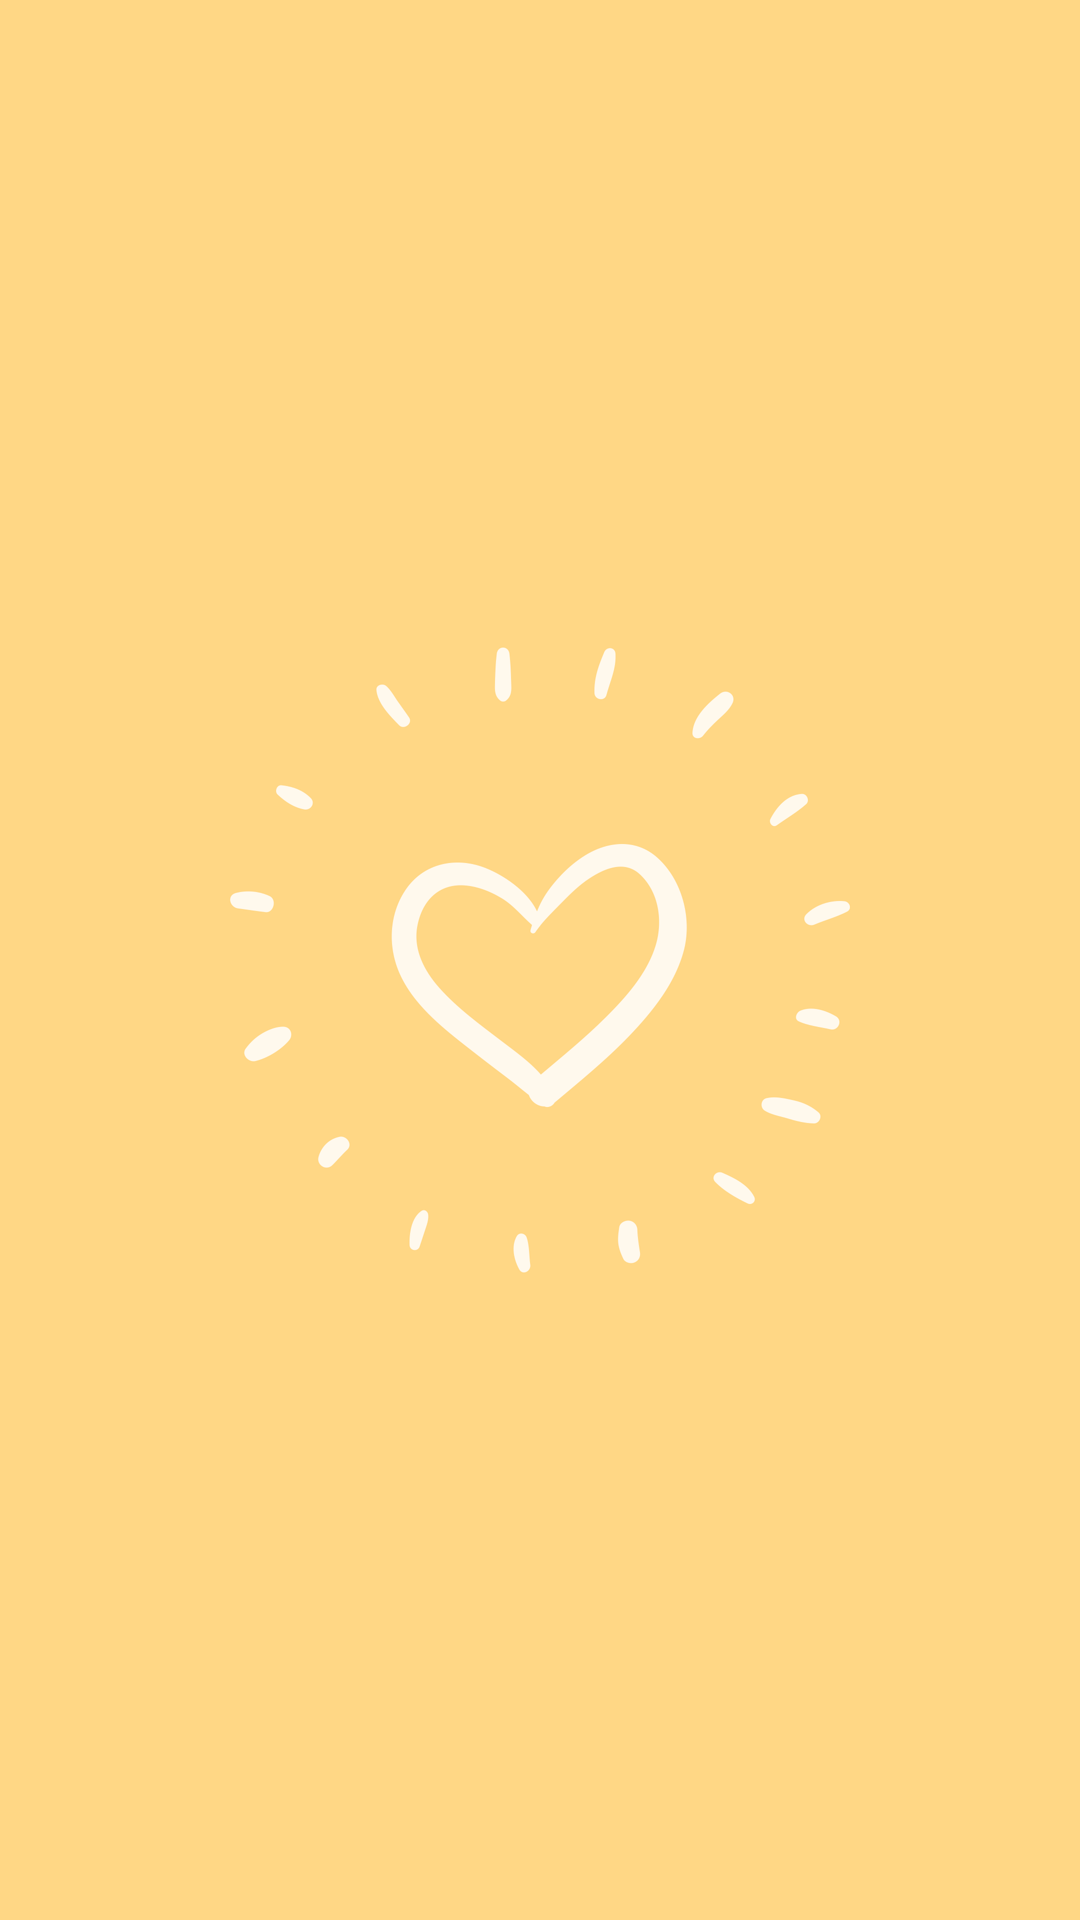 1080x1920 Jennifer Richburg On Instagram Cute Wallpaper Background Heart Wallpaper Iphone Wallpaper